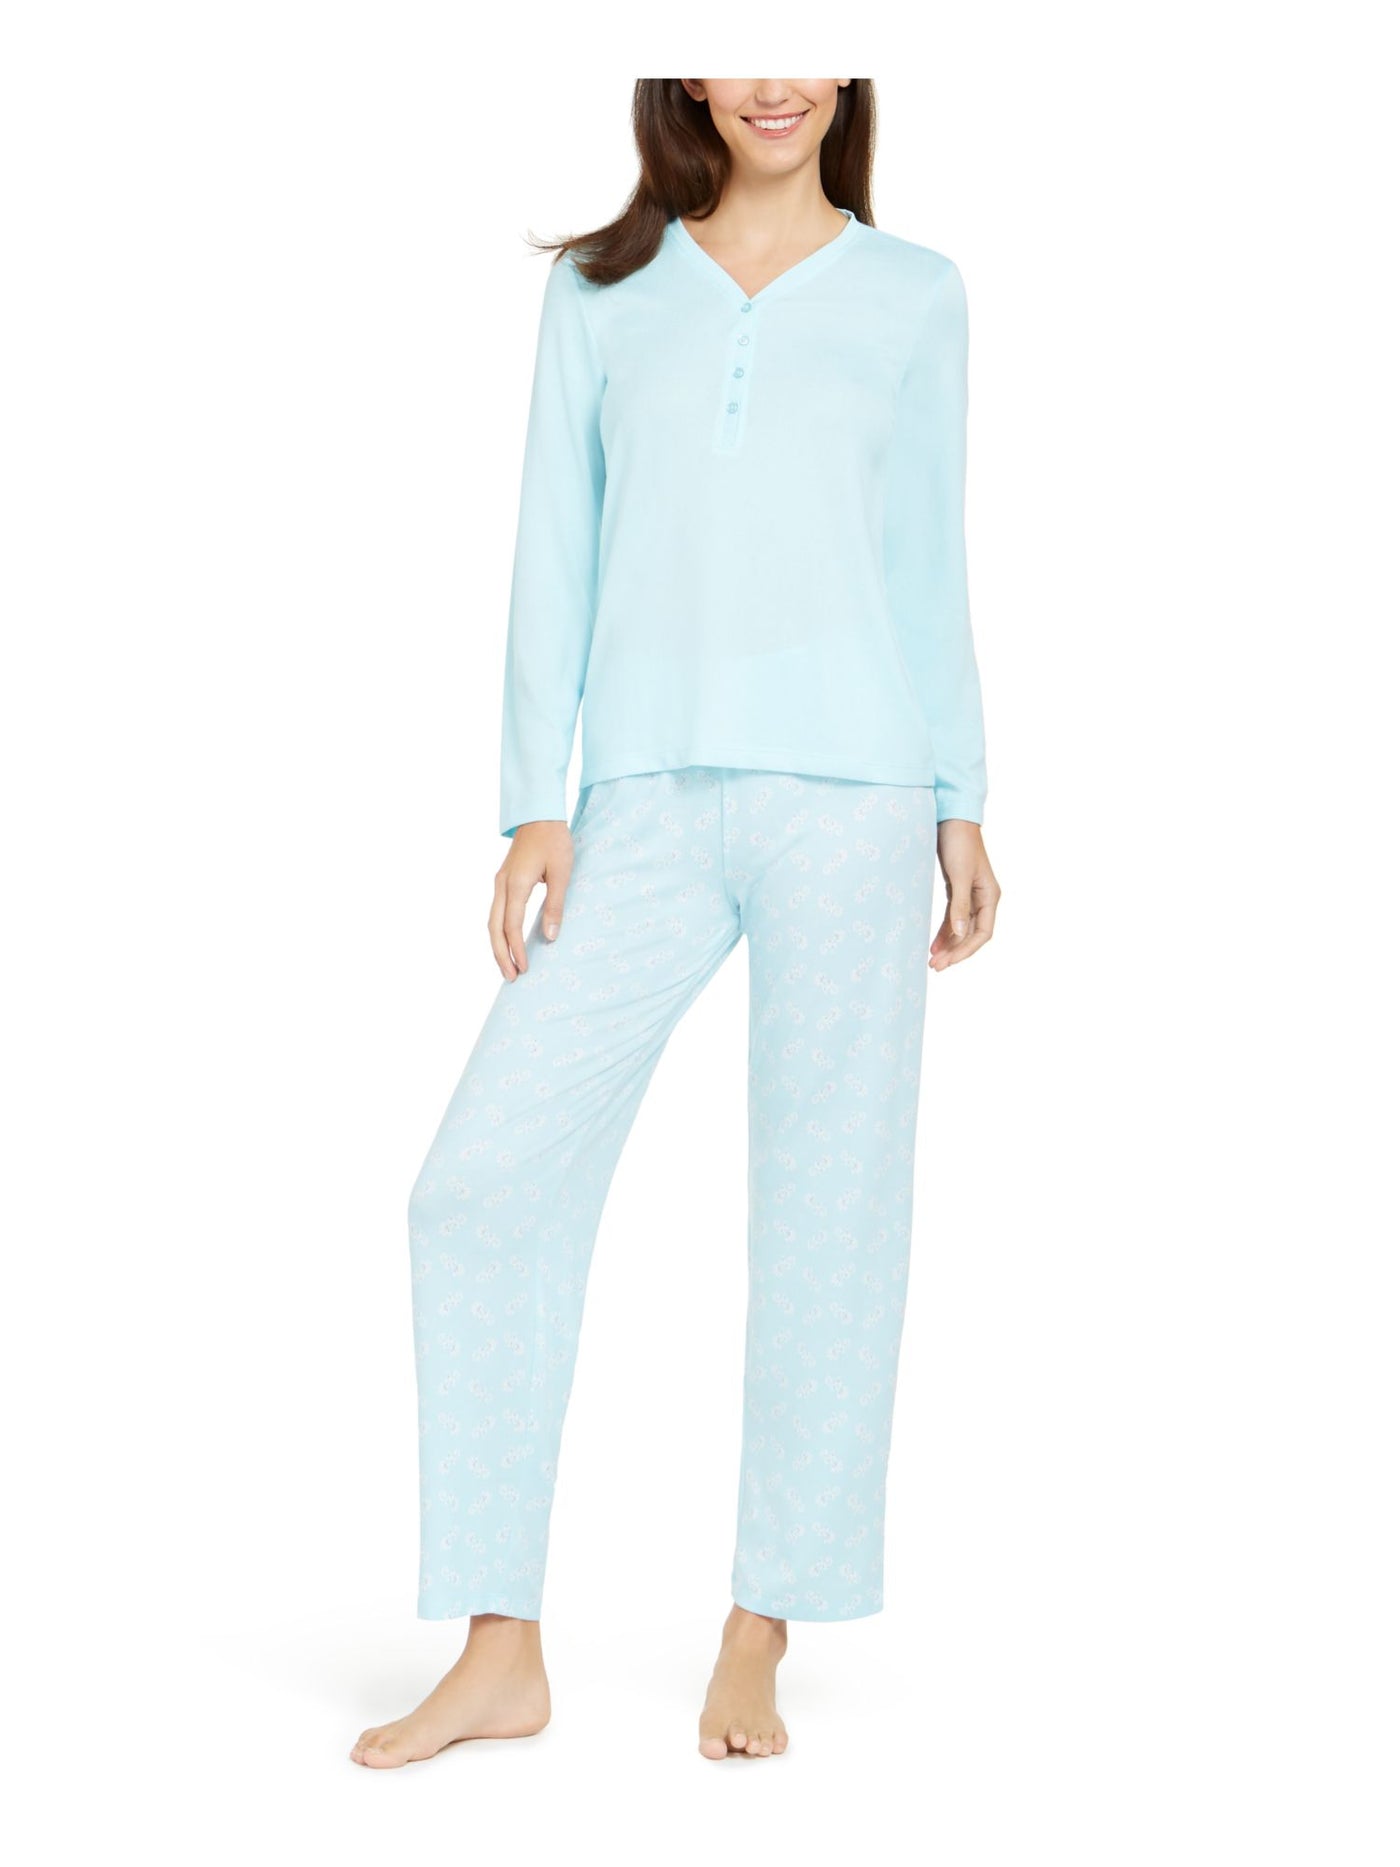 CHARTER CLUB INTIMATES Womens Light Blue Long Sleeve T-Shirt Top Straight leg Pants Pajamas XS